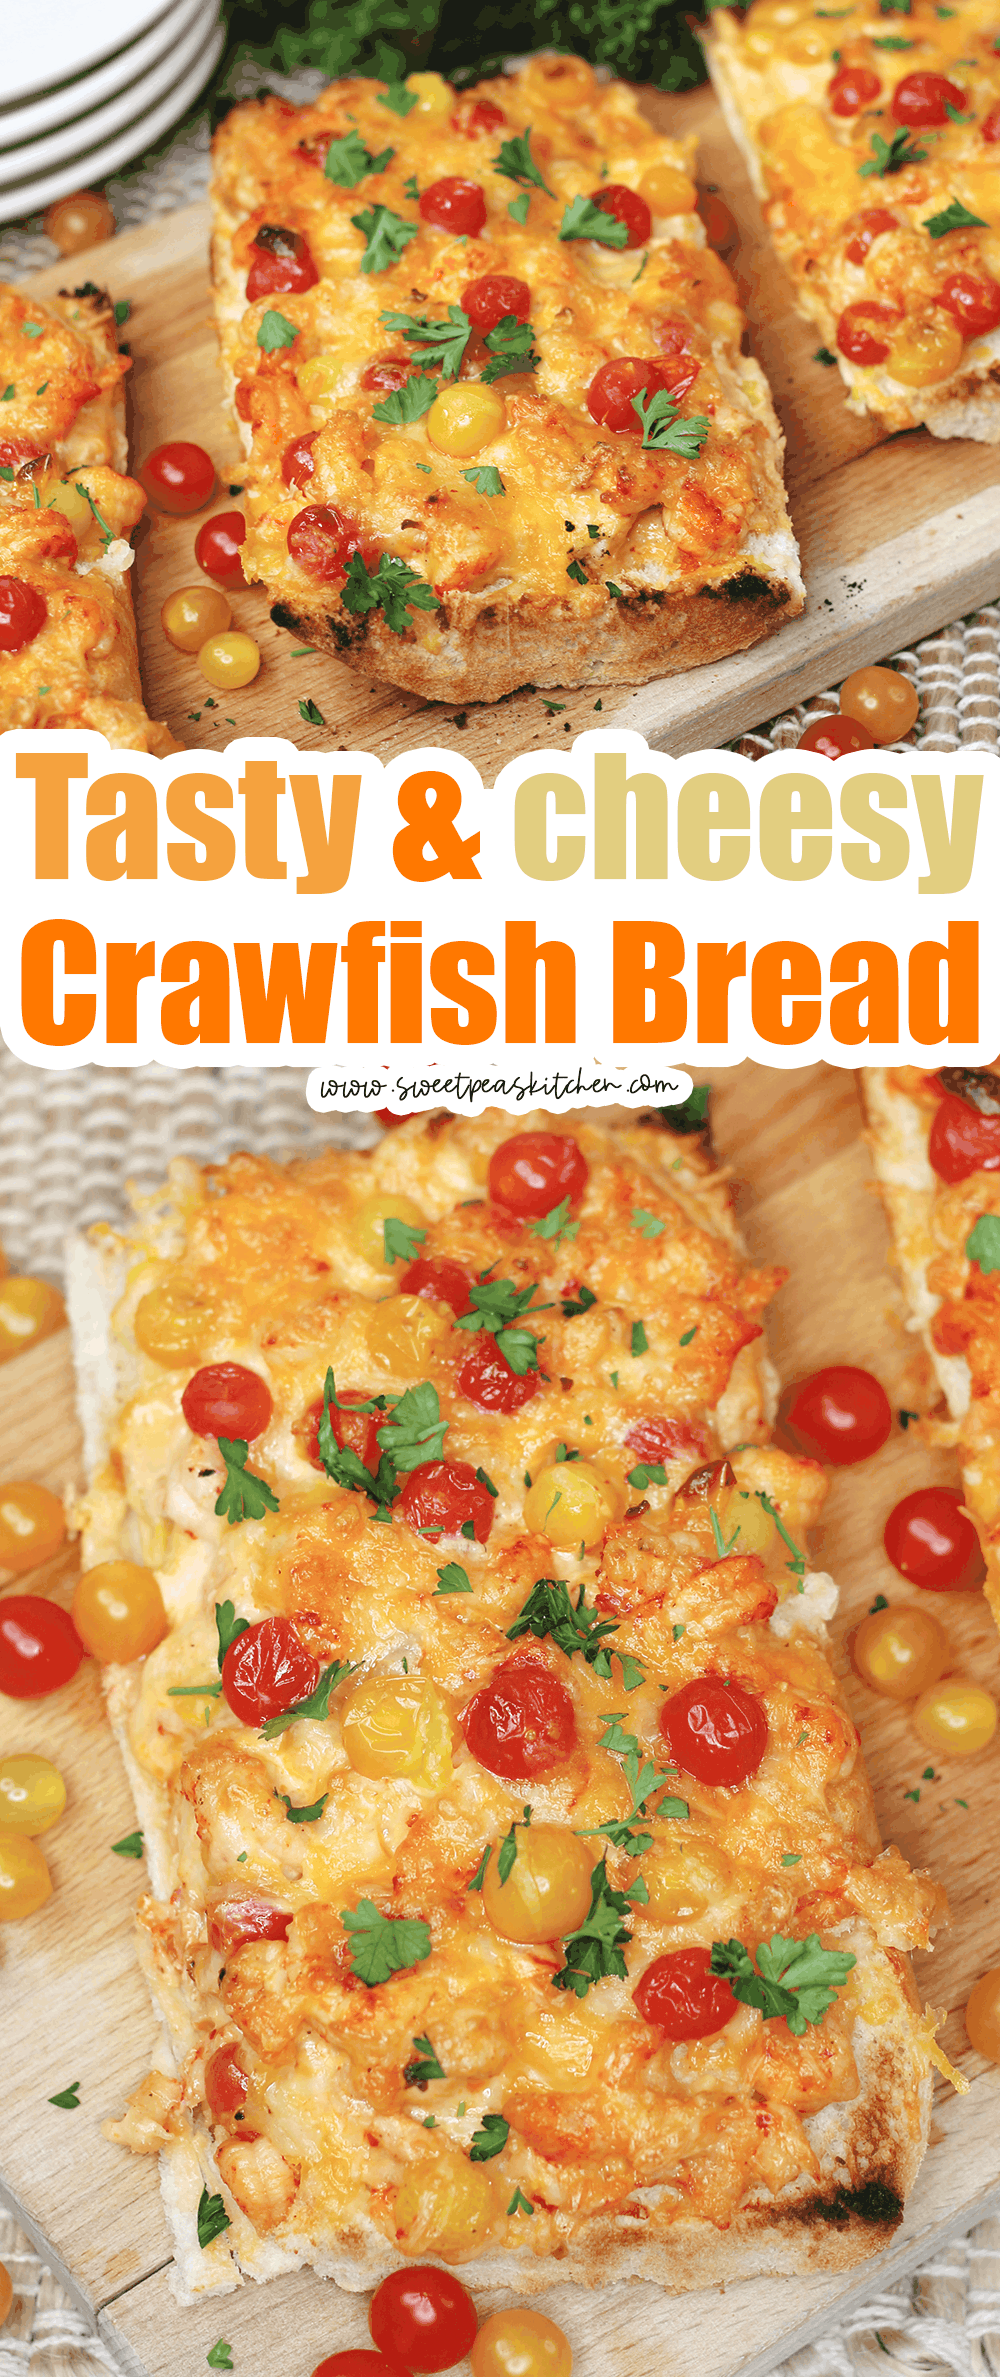 Crawfish Bread